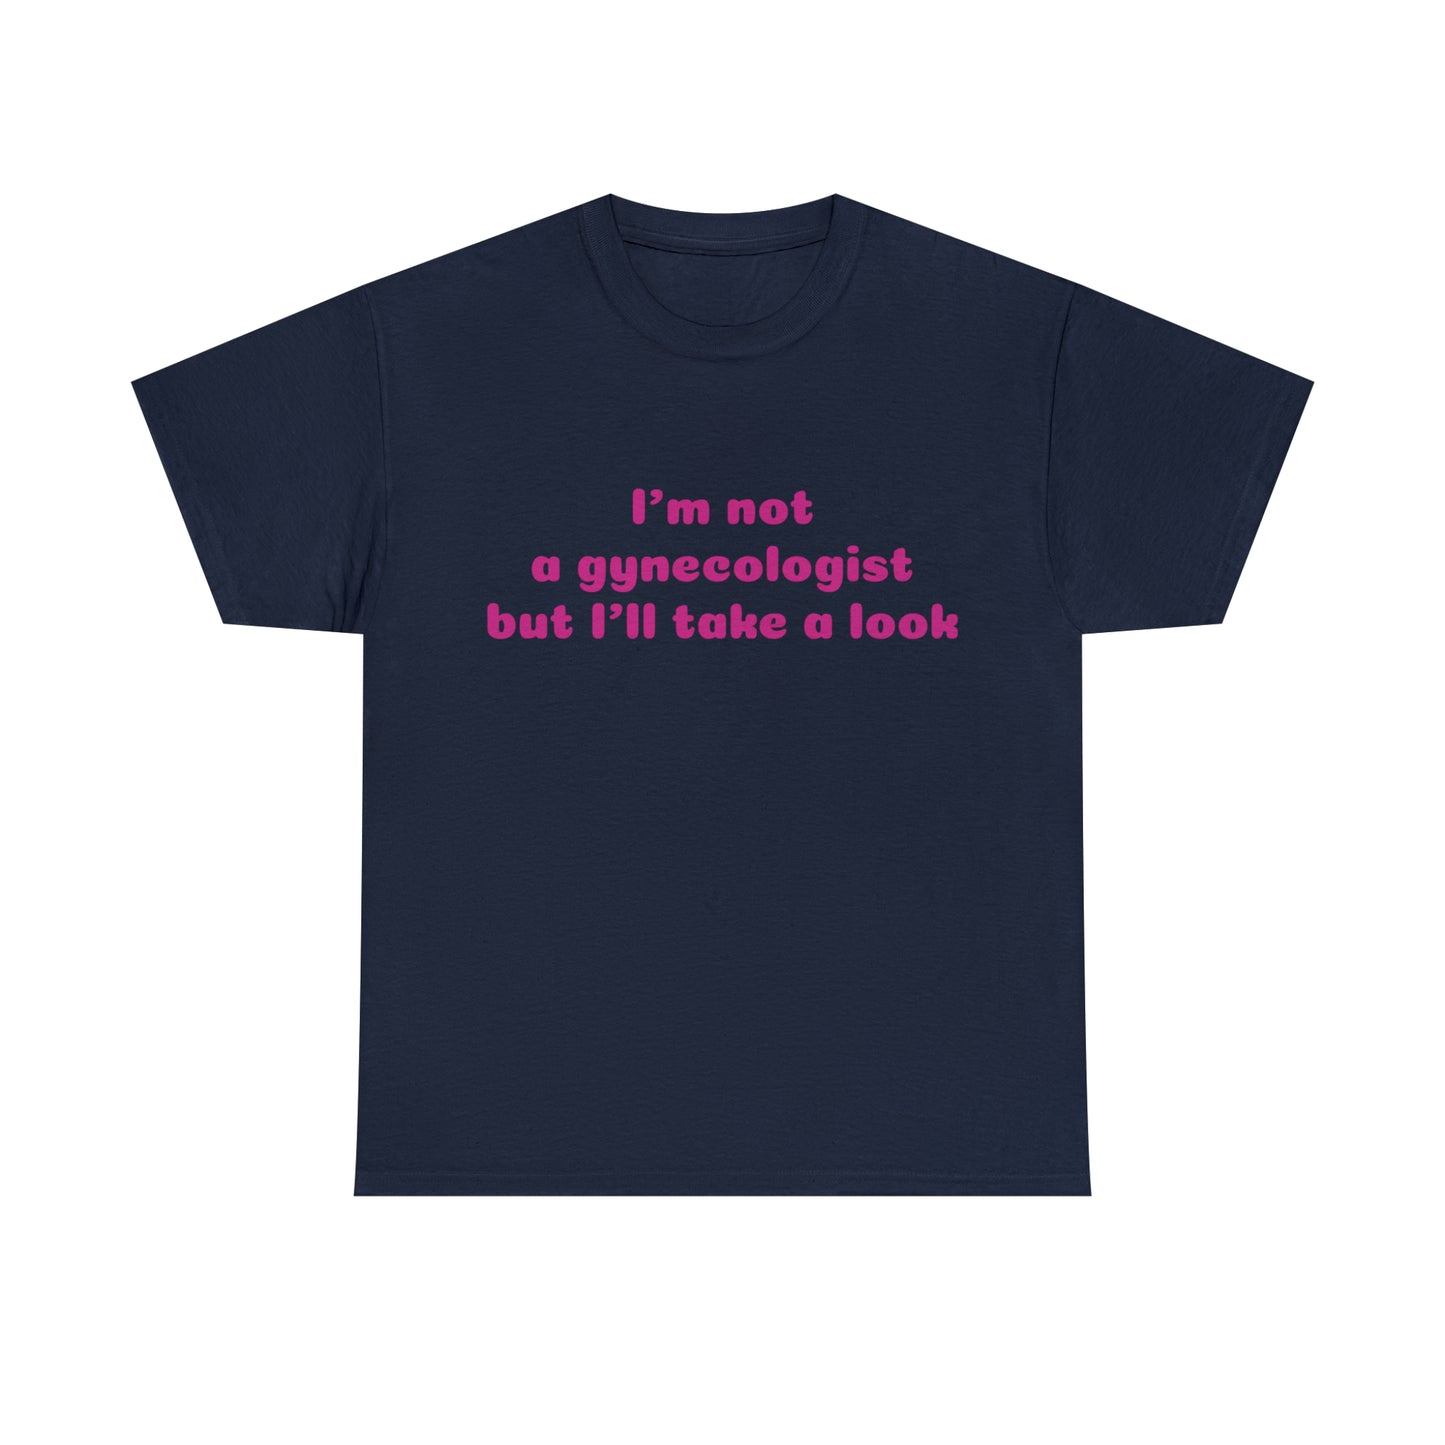 Custom Parody T-shirts, Im not a gynecologist but ill take a look shirt design